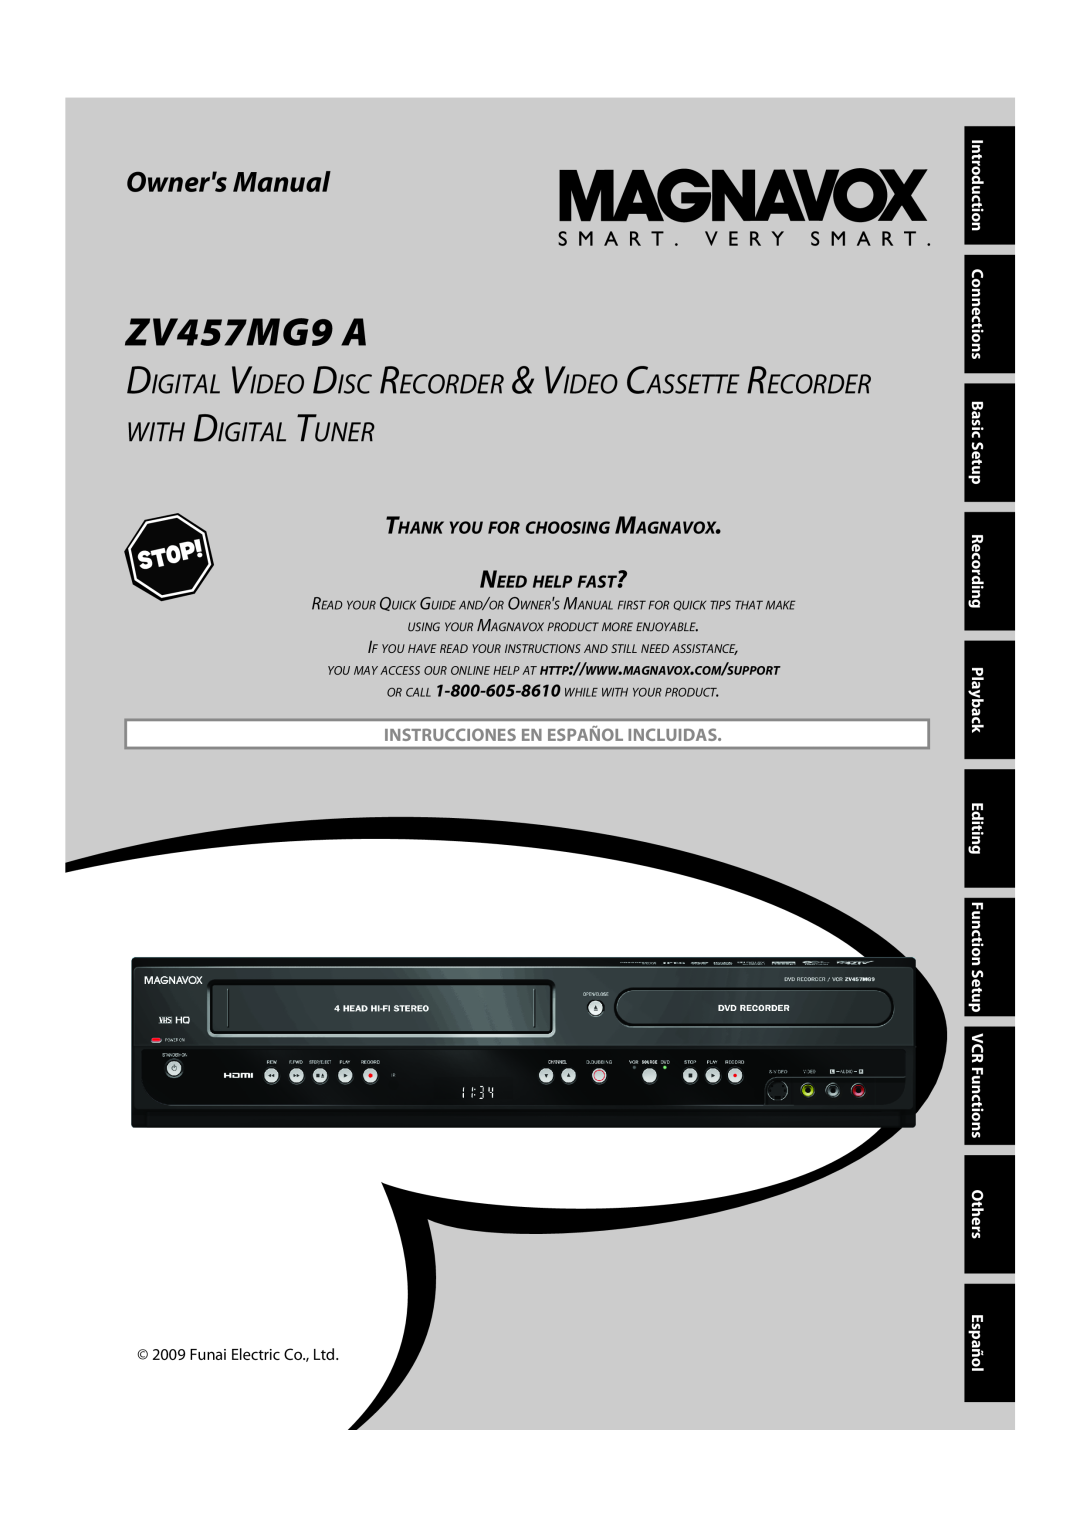 FUNAI ZV457MG9 A owner manual Owners Manual, Thank You For Choosing Magnavox Need Help Fast?, Español 